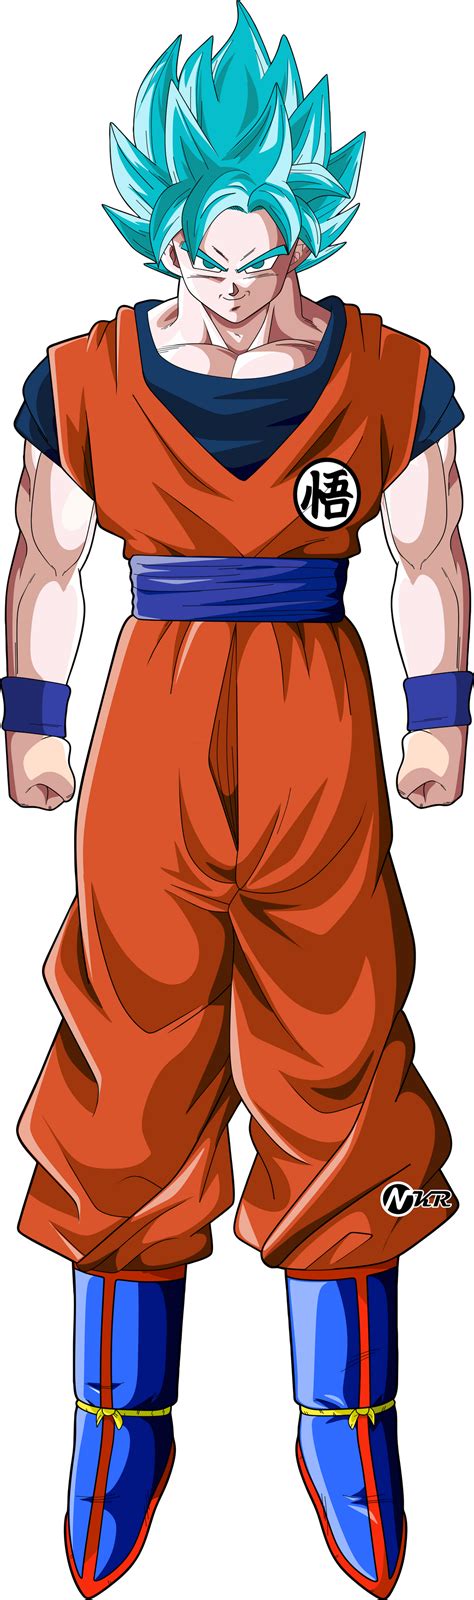 Goku Ssj Blue By Naironkr On Deviantart Dragon Ball Super Goku Hot